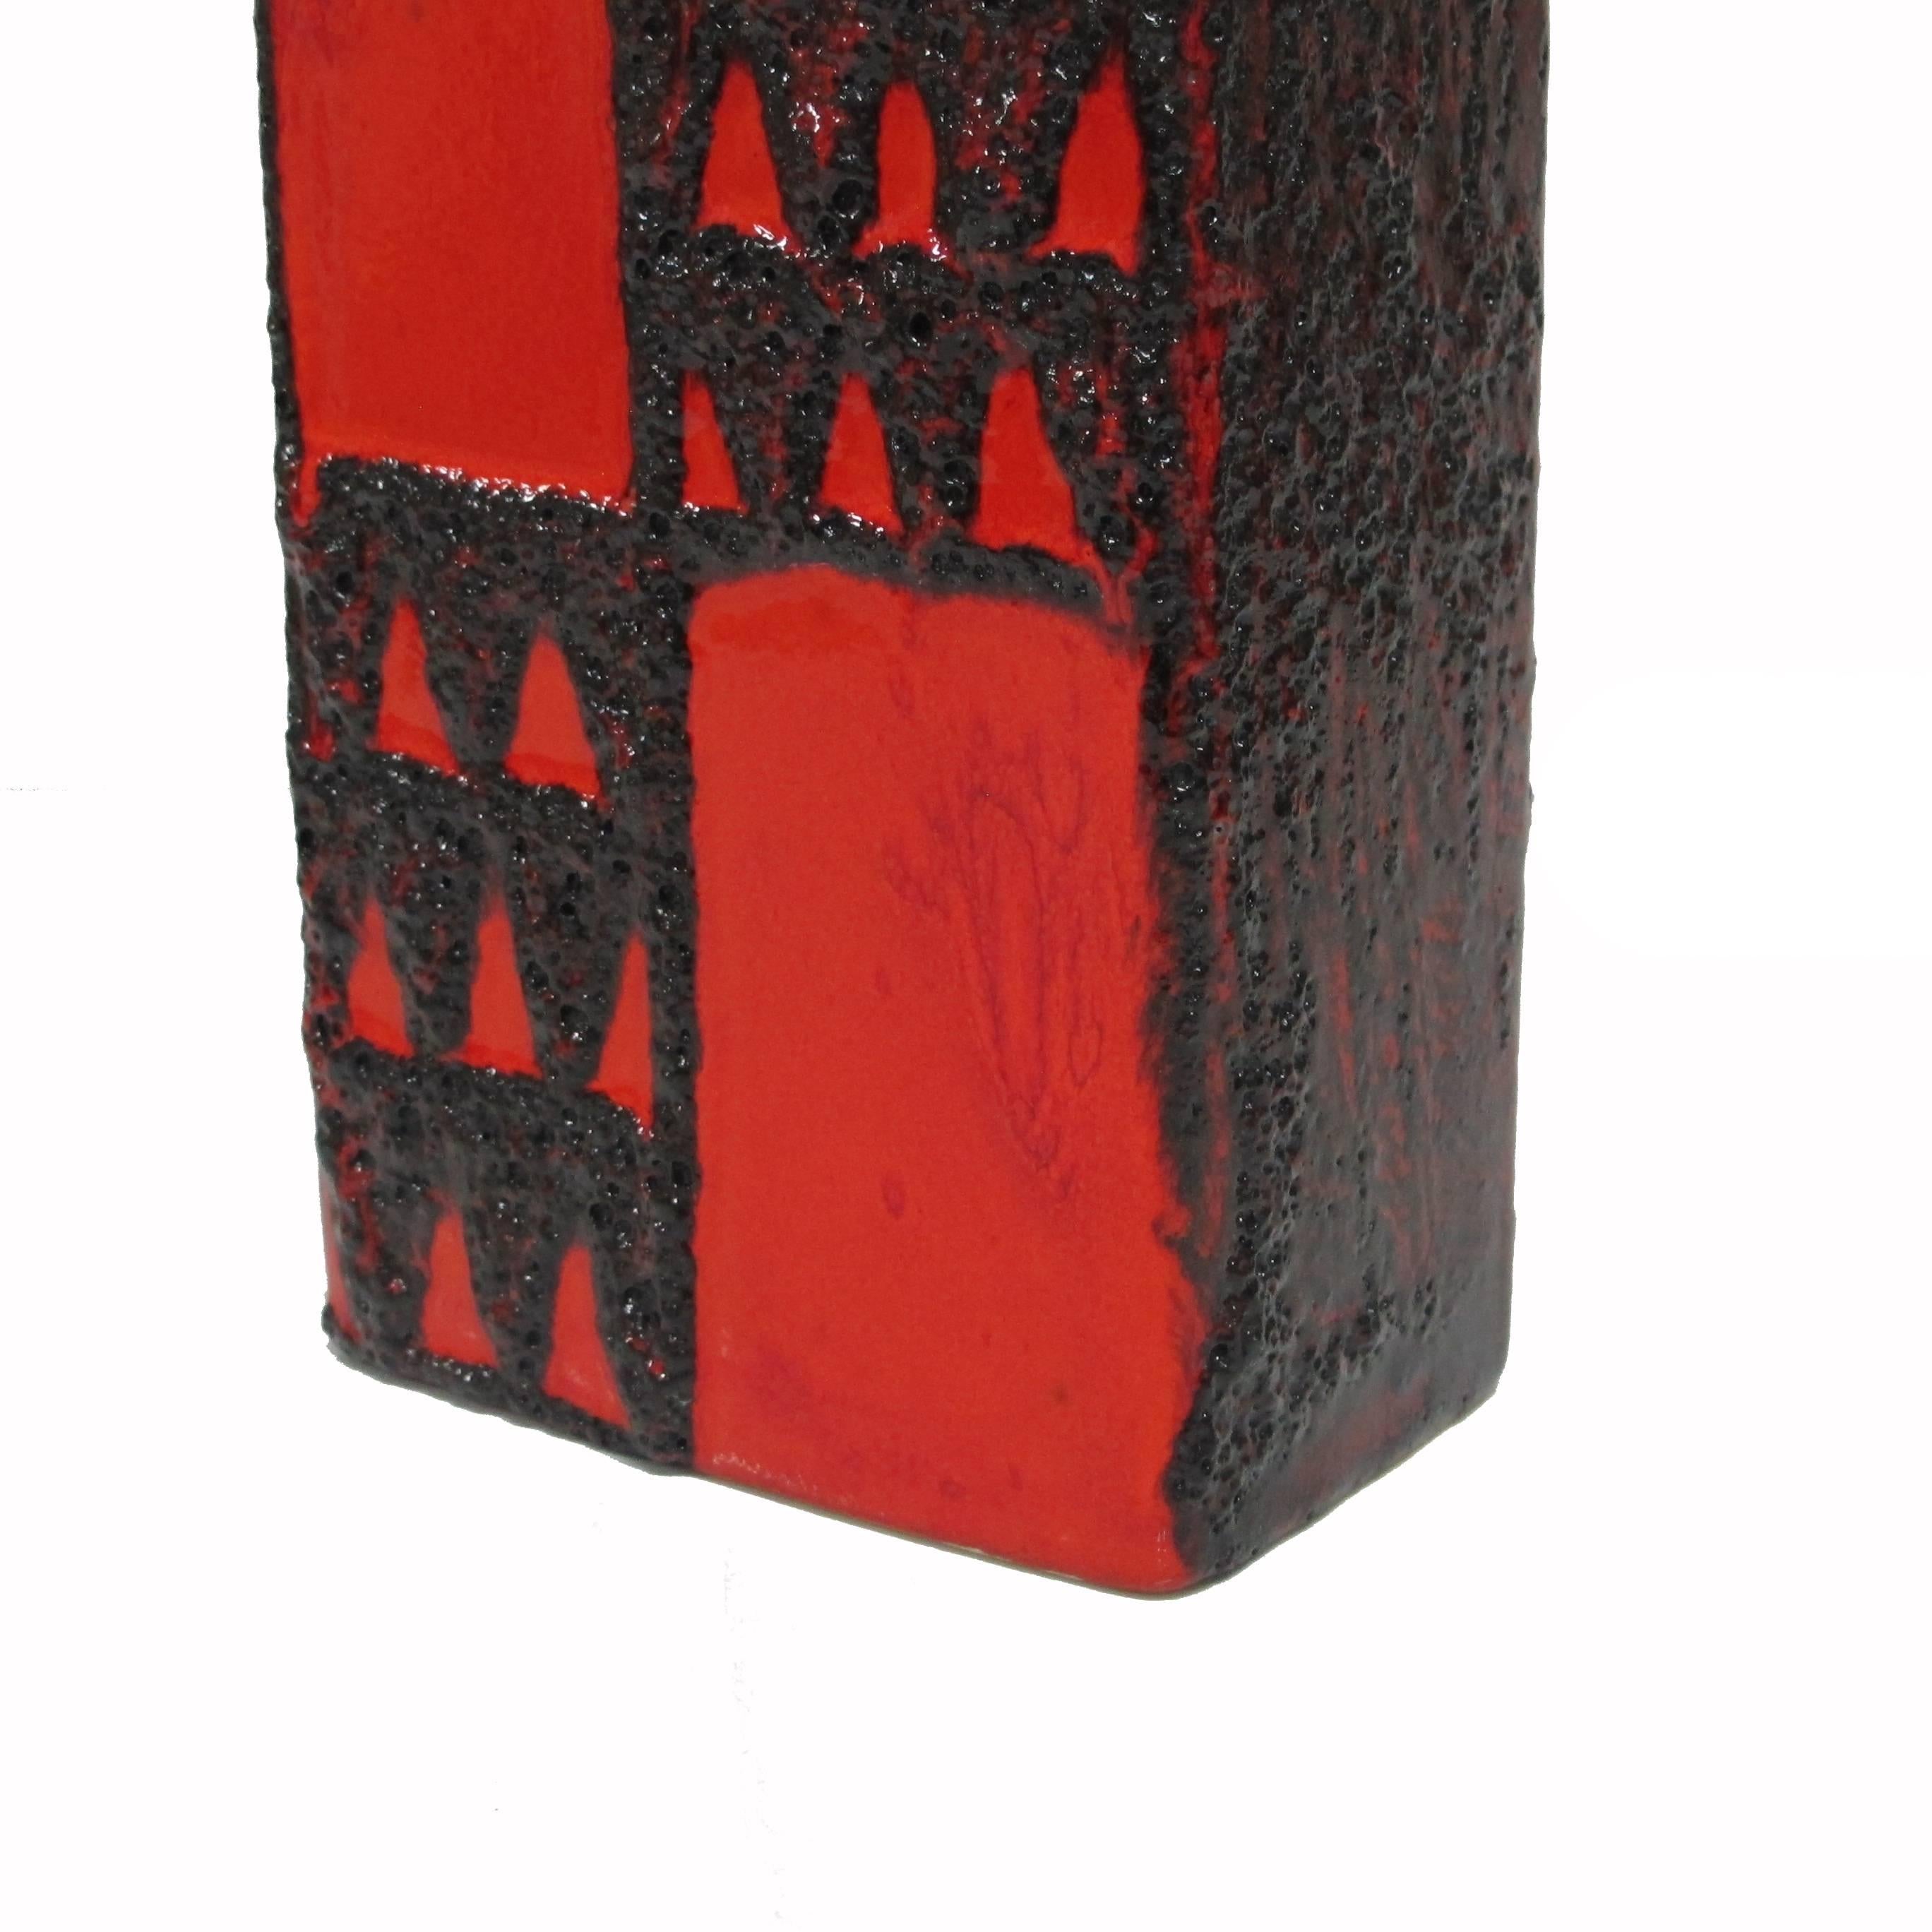 Scheurich Keramic Vase, Lava Glaze, Ceramic, Red and Black, Geometric, Signed 1